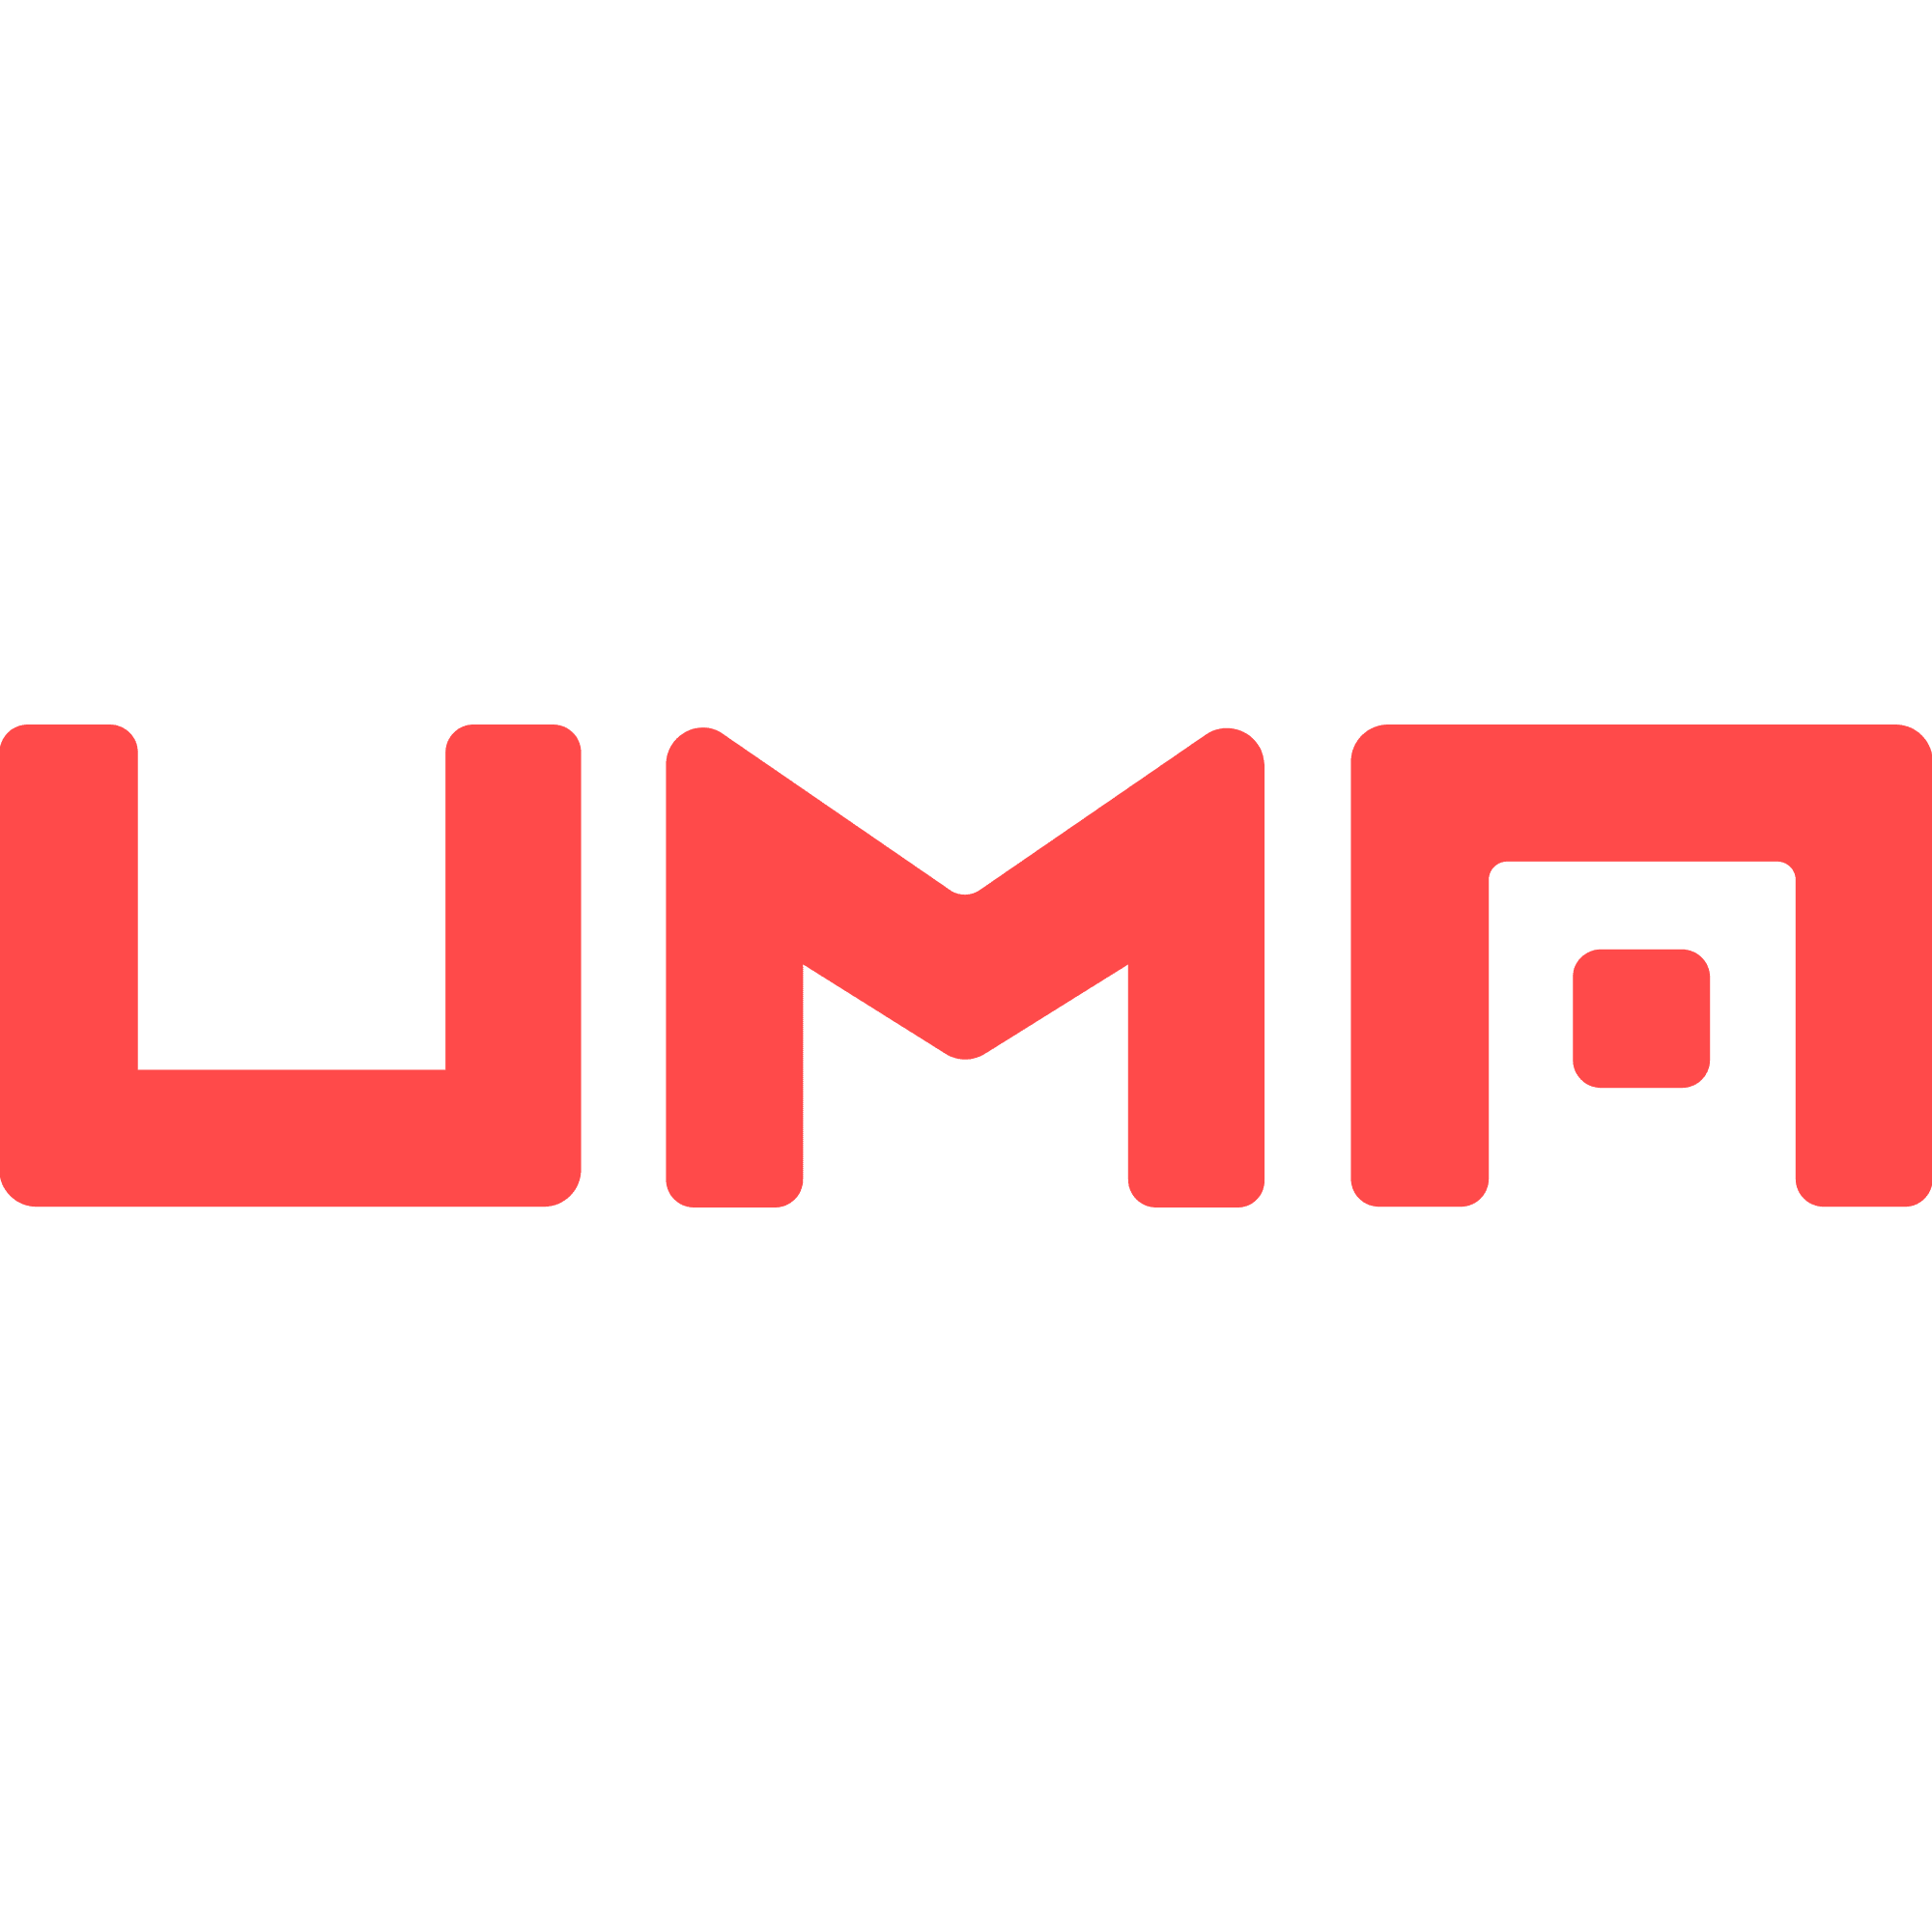 UMA logo in png format